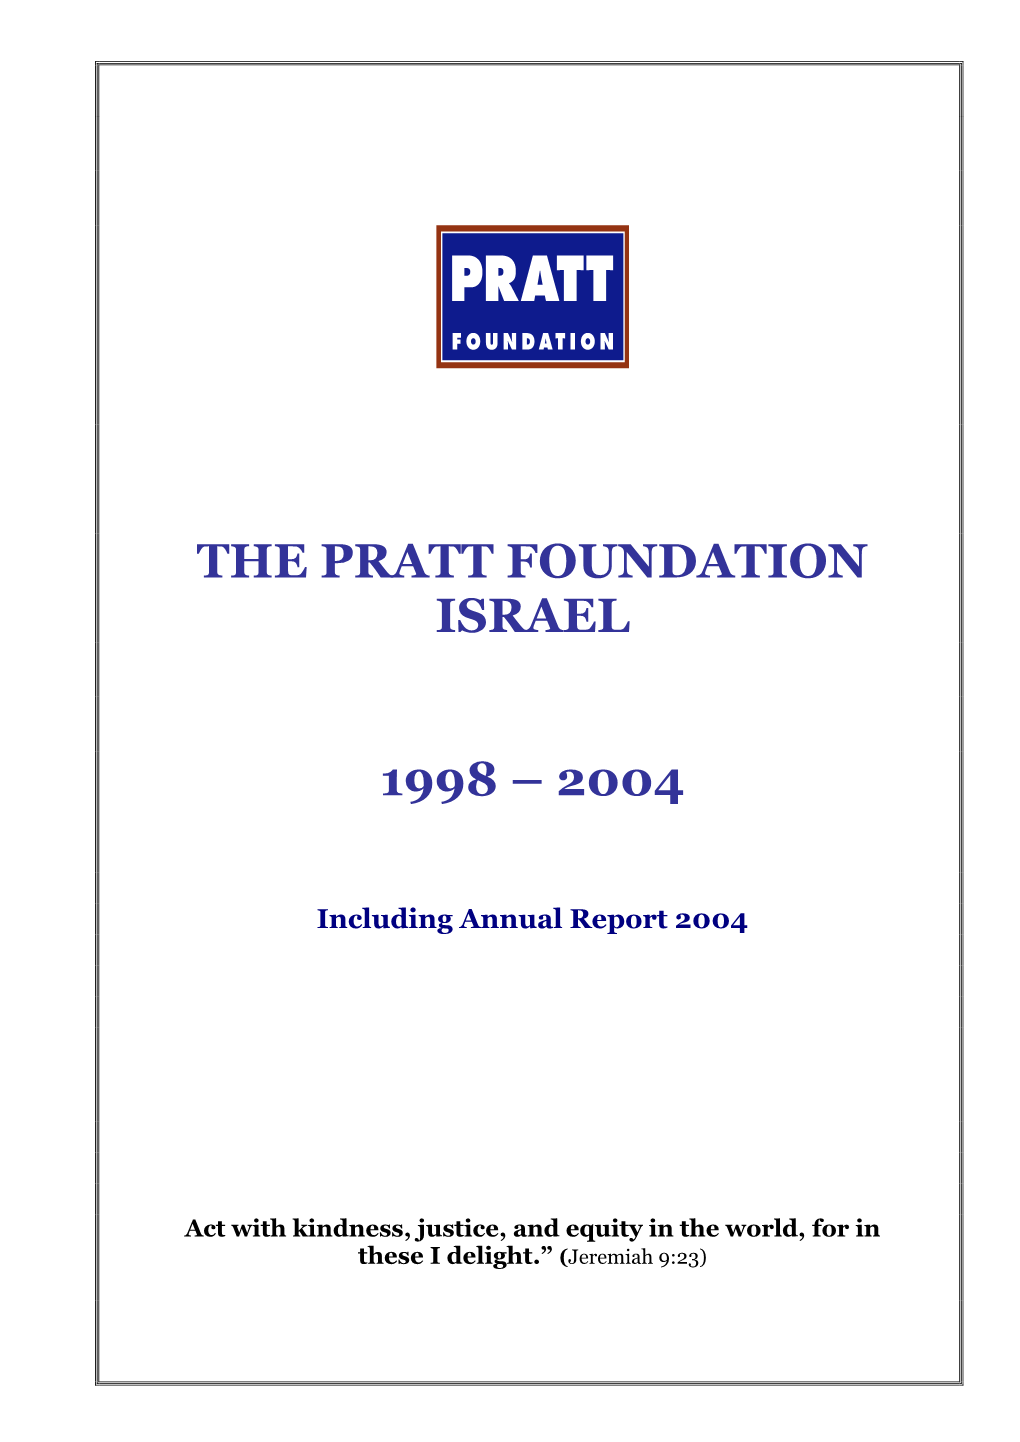 The Pratt Foundation Israel